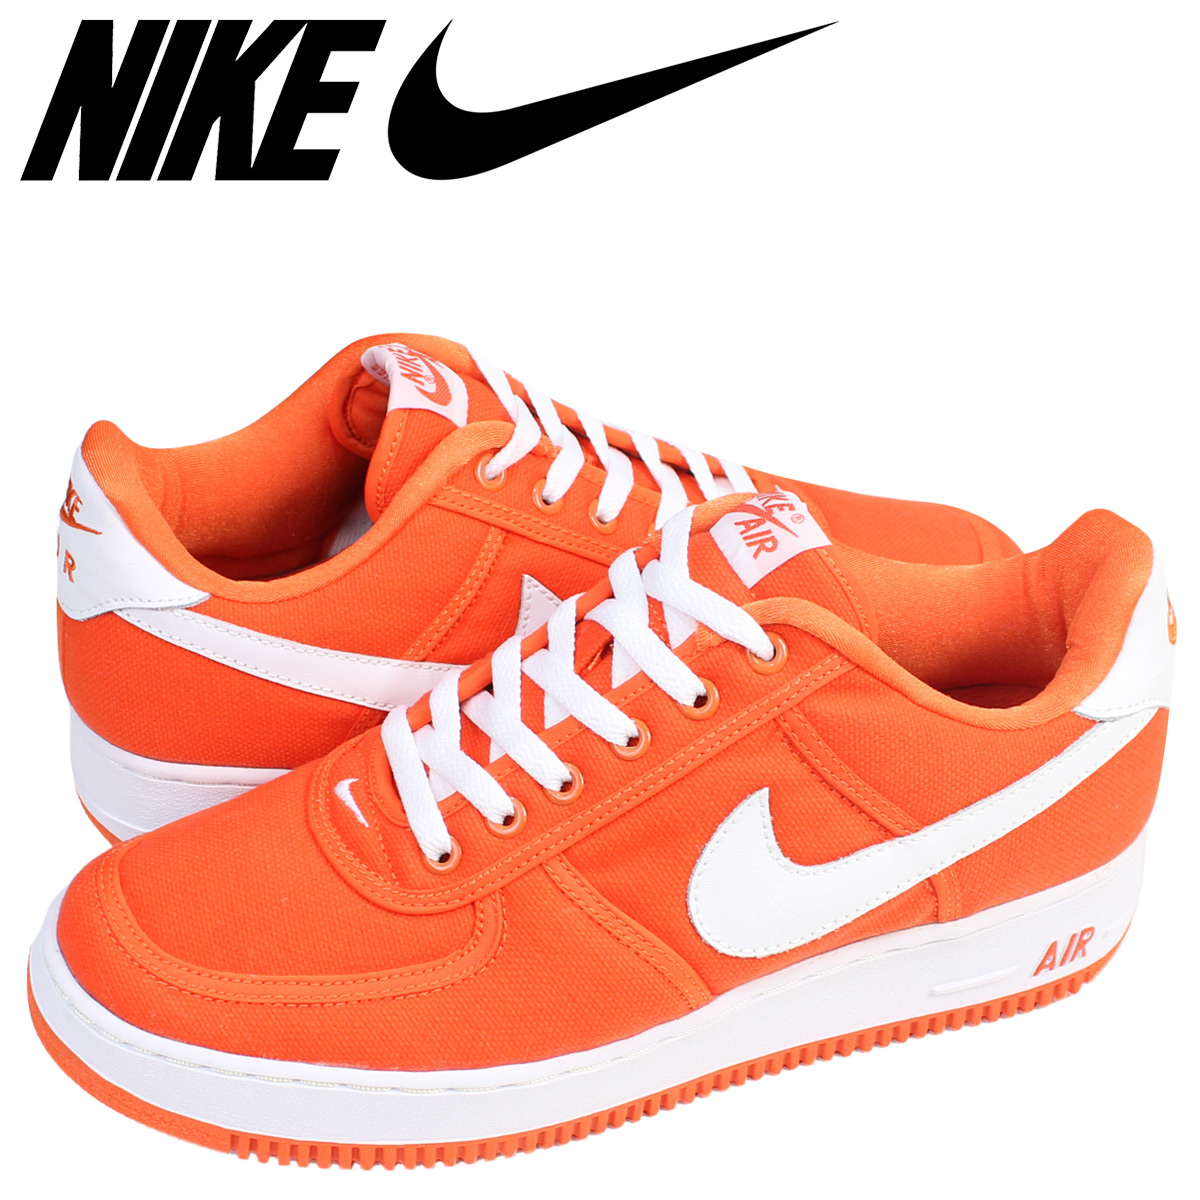 nike mens shoes orange